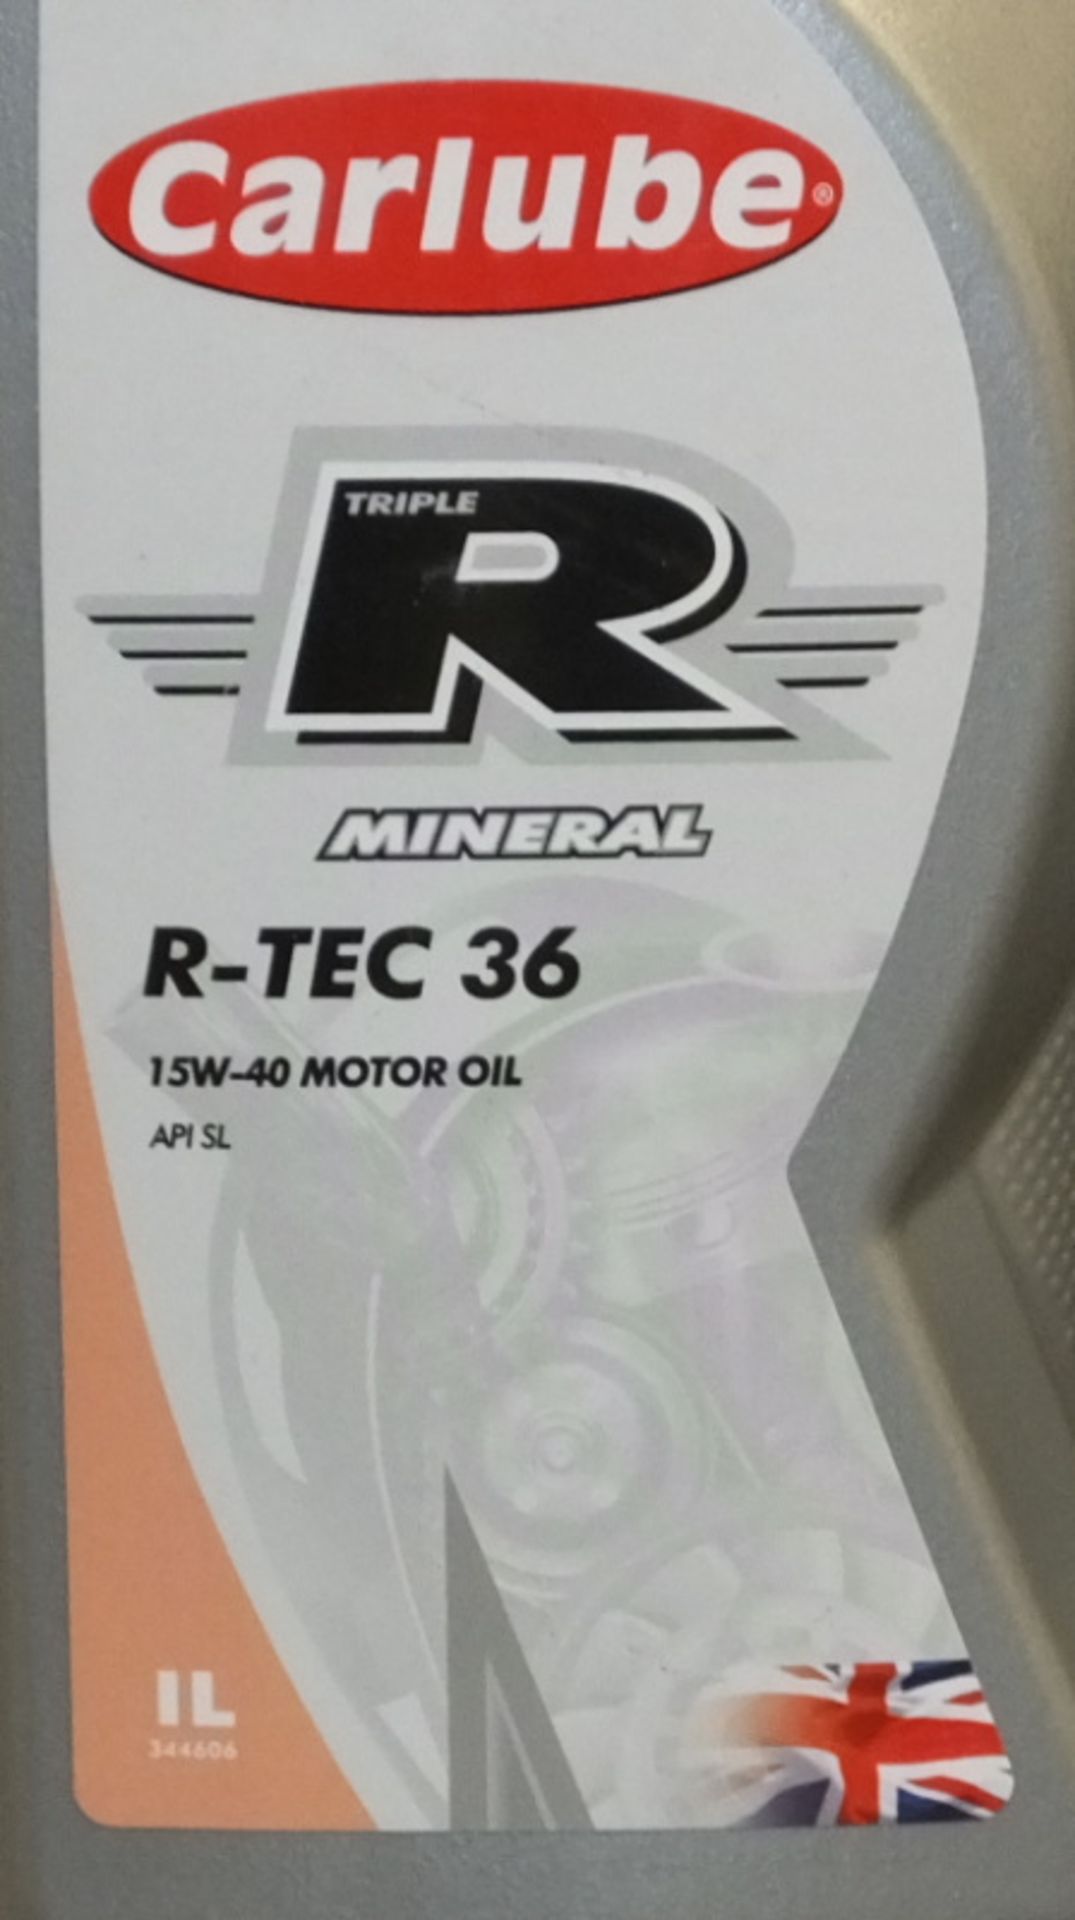 9x Carlube R-Tec 36 mineral 15W-40 motor oil 1L - Image 2 of 2